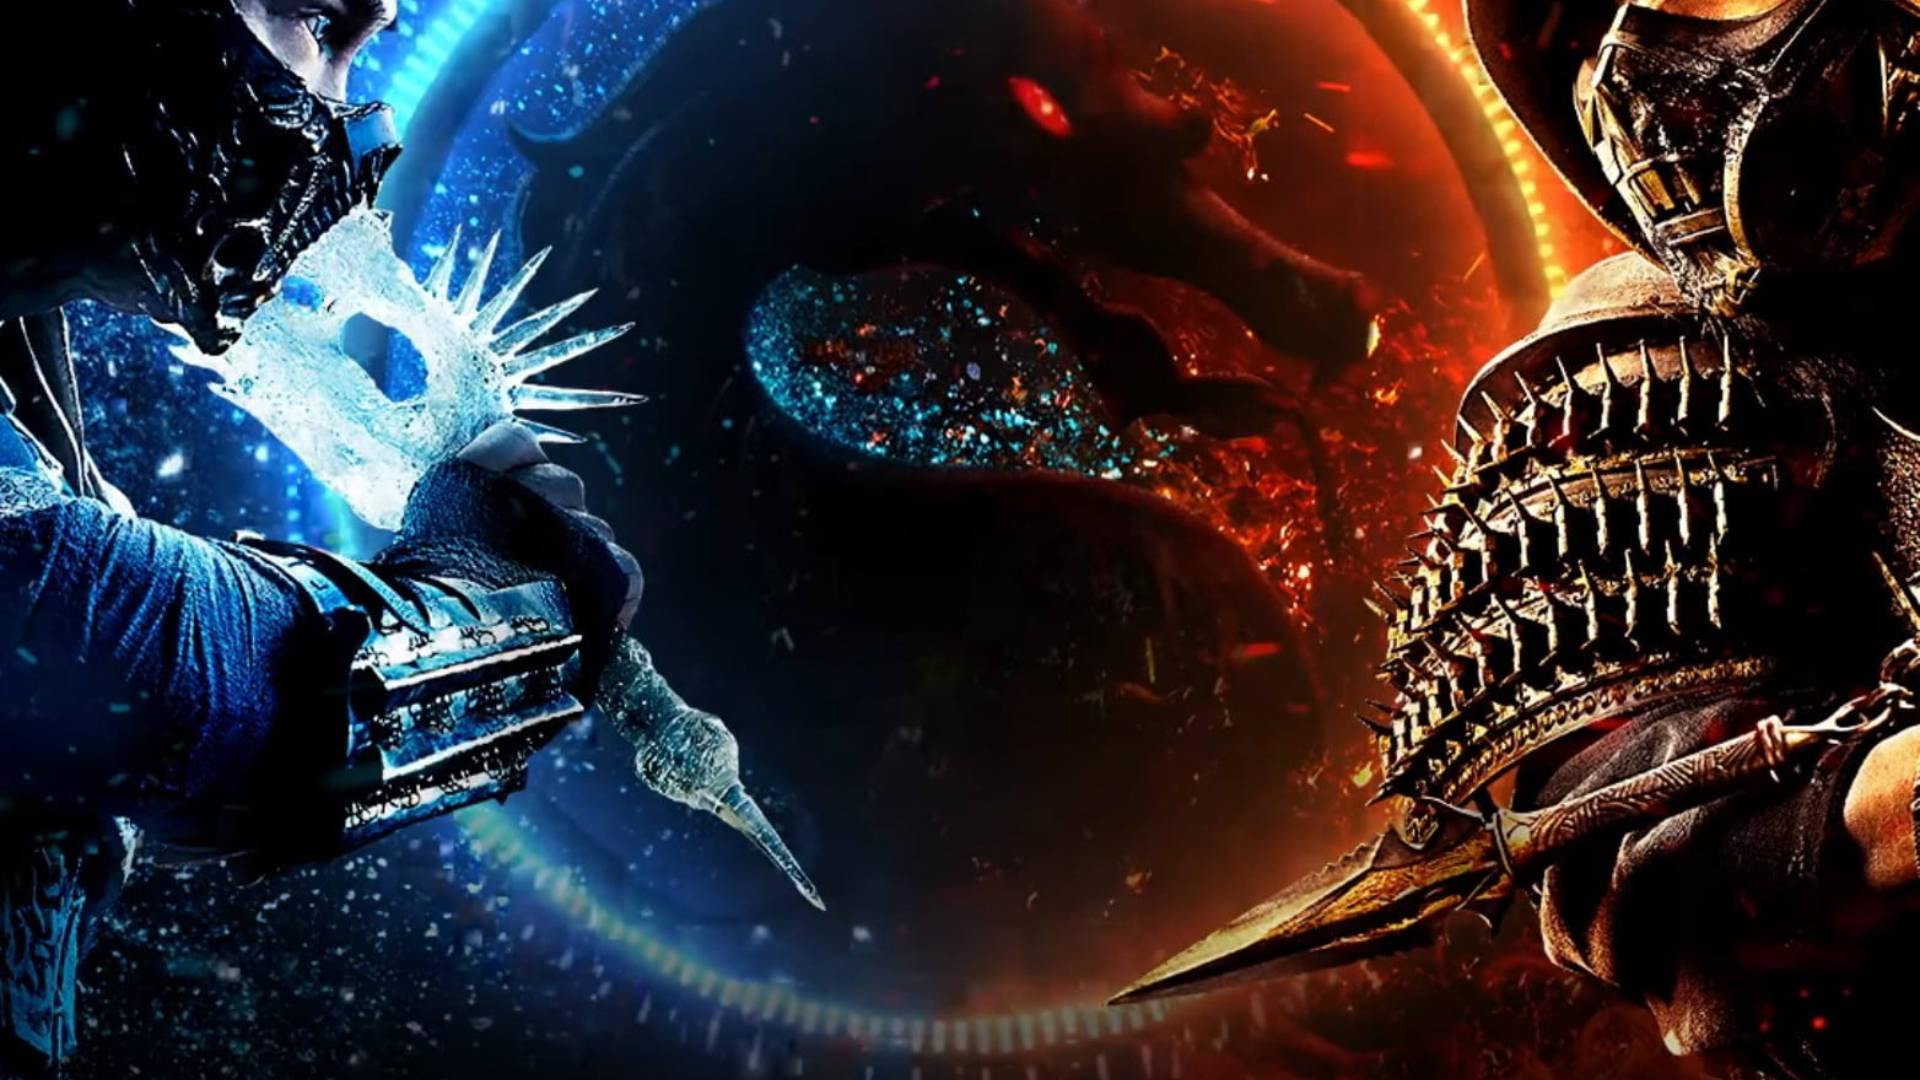 Mortal Kombat Scorpion Vs Sub Zero Weapons Background